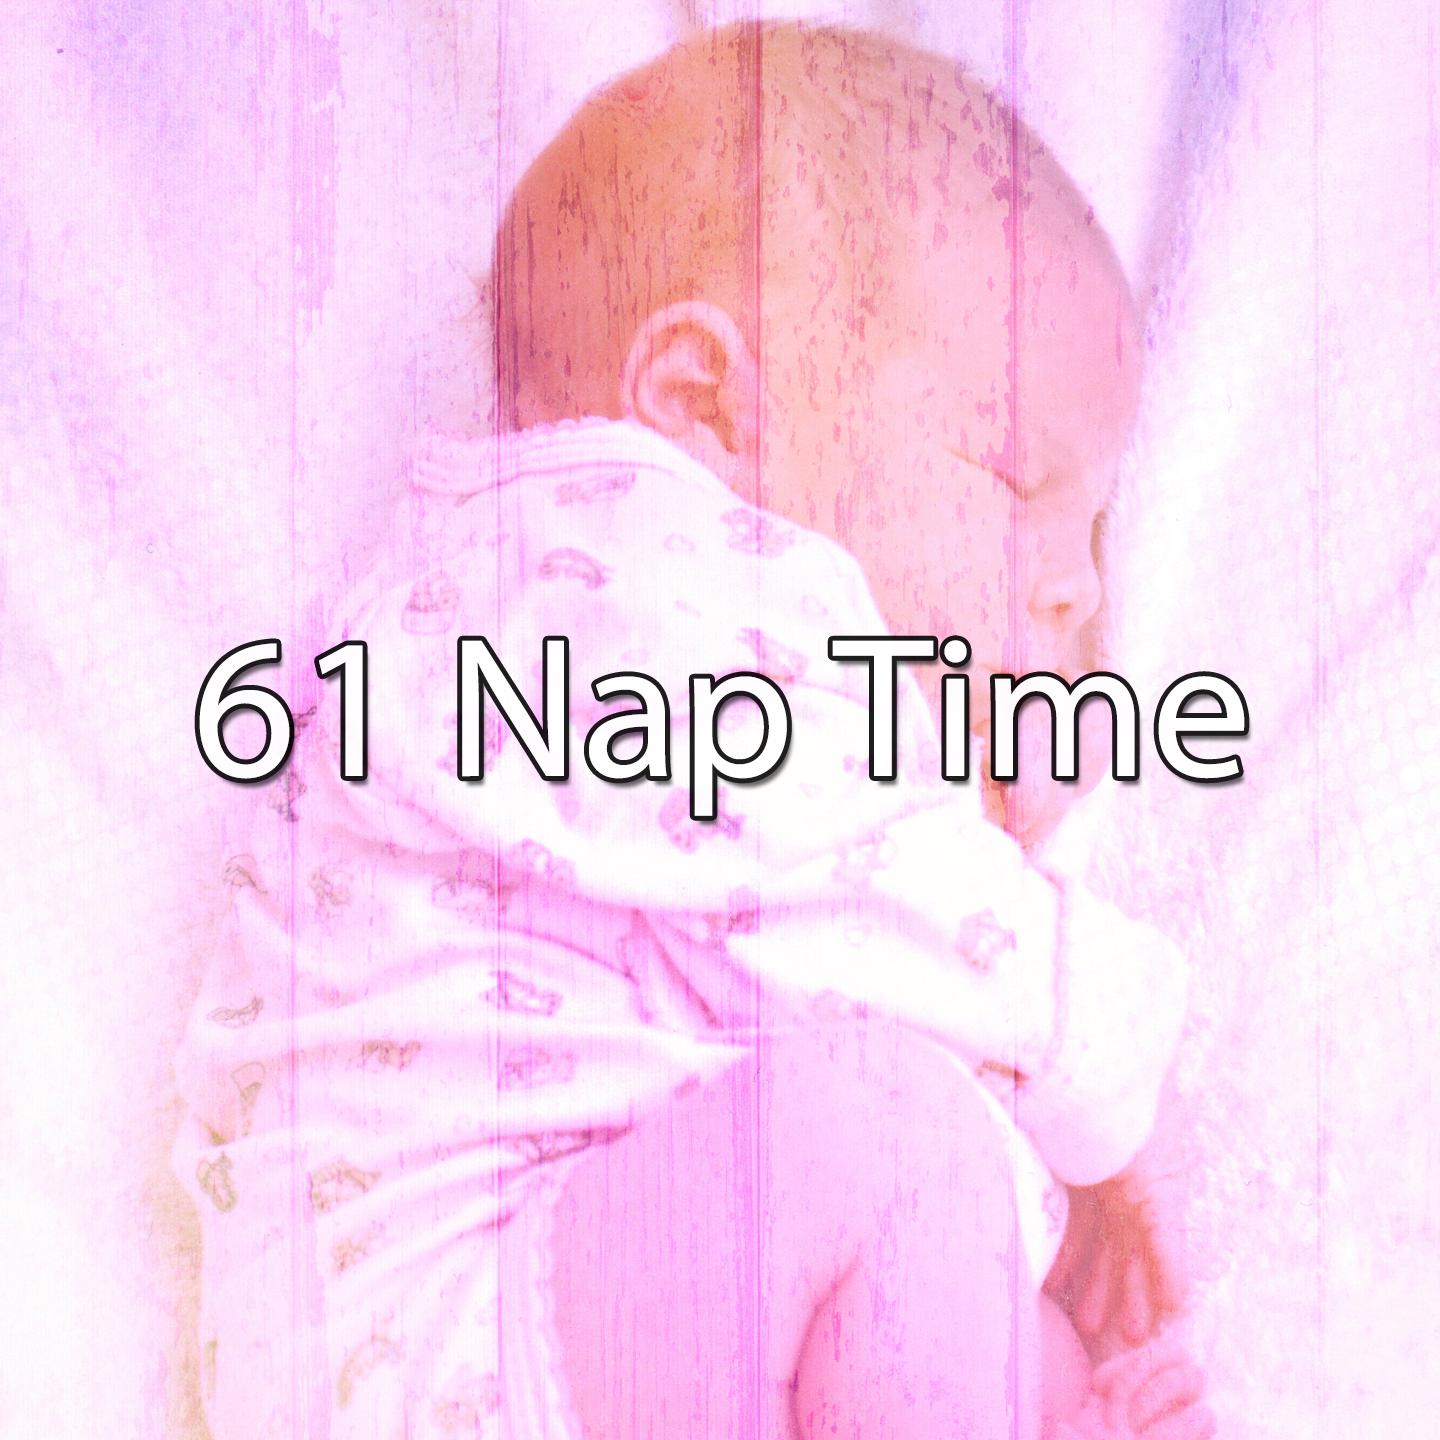 61 Nap Time